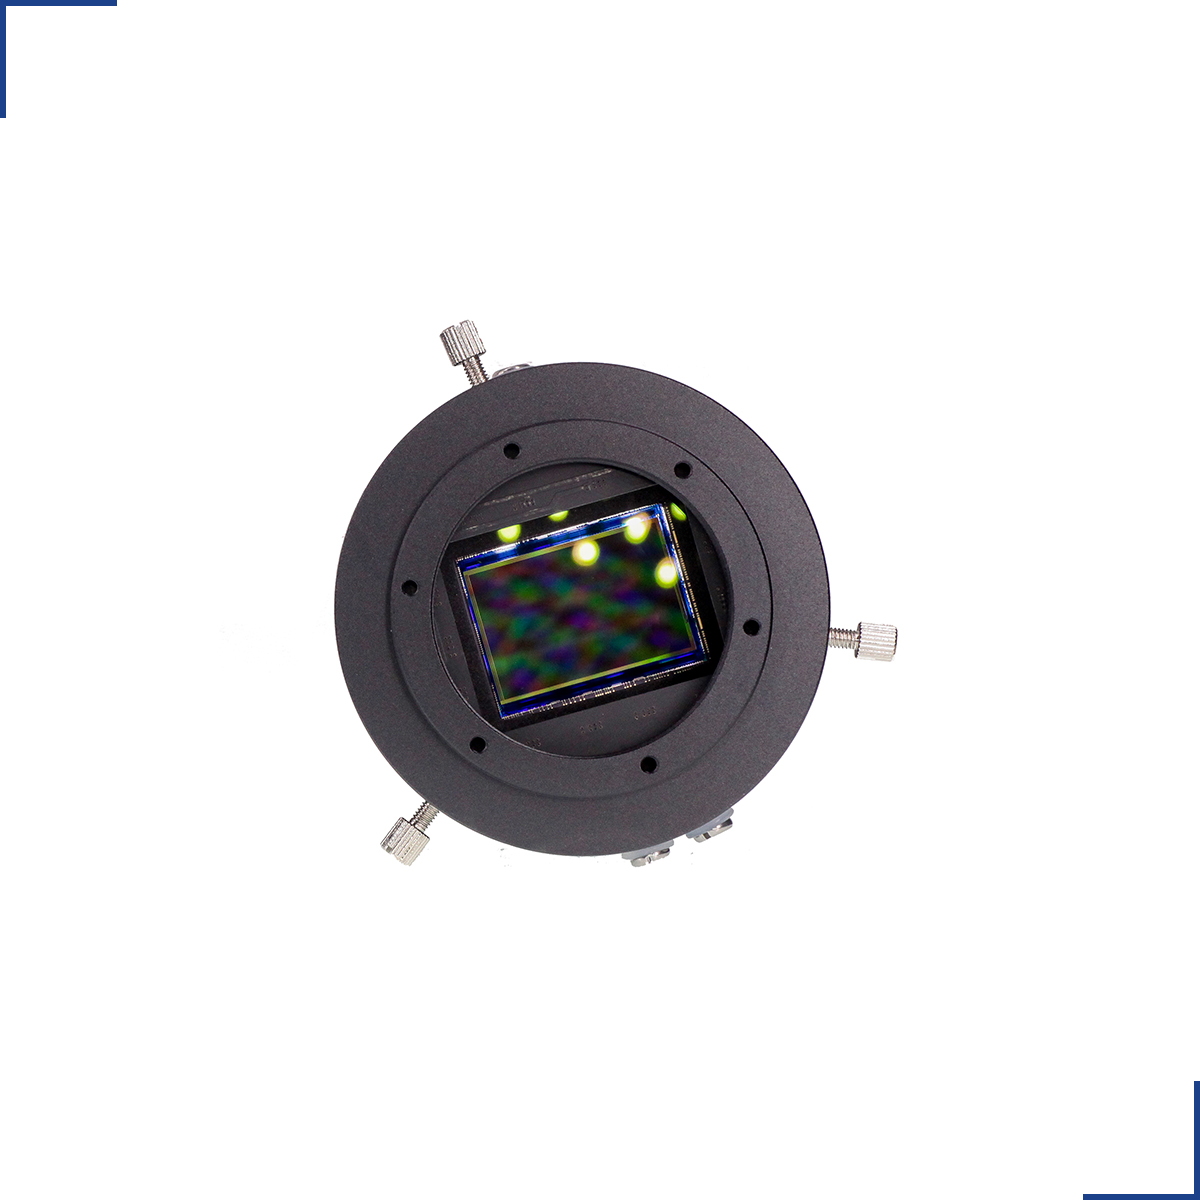 QHYCCD astrocamera ASI Sony IMX deepsky 天文相机 深空相机 制冷相机